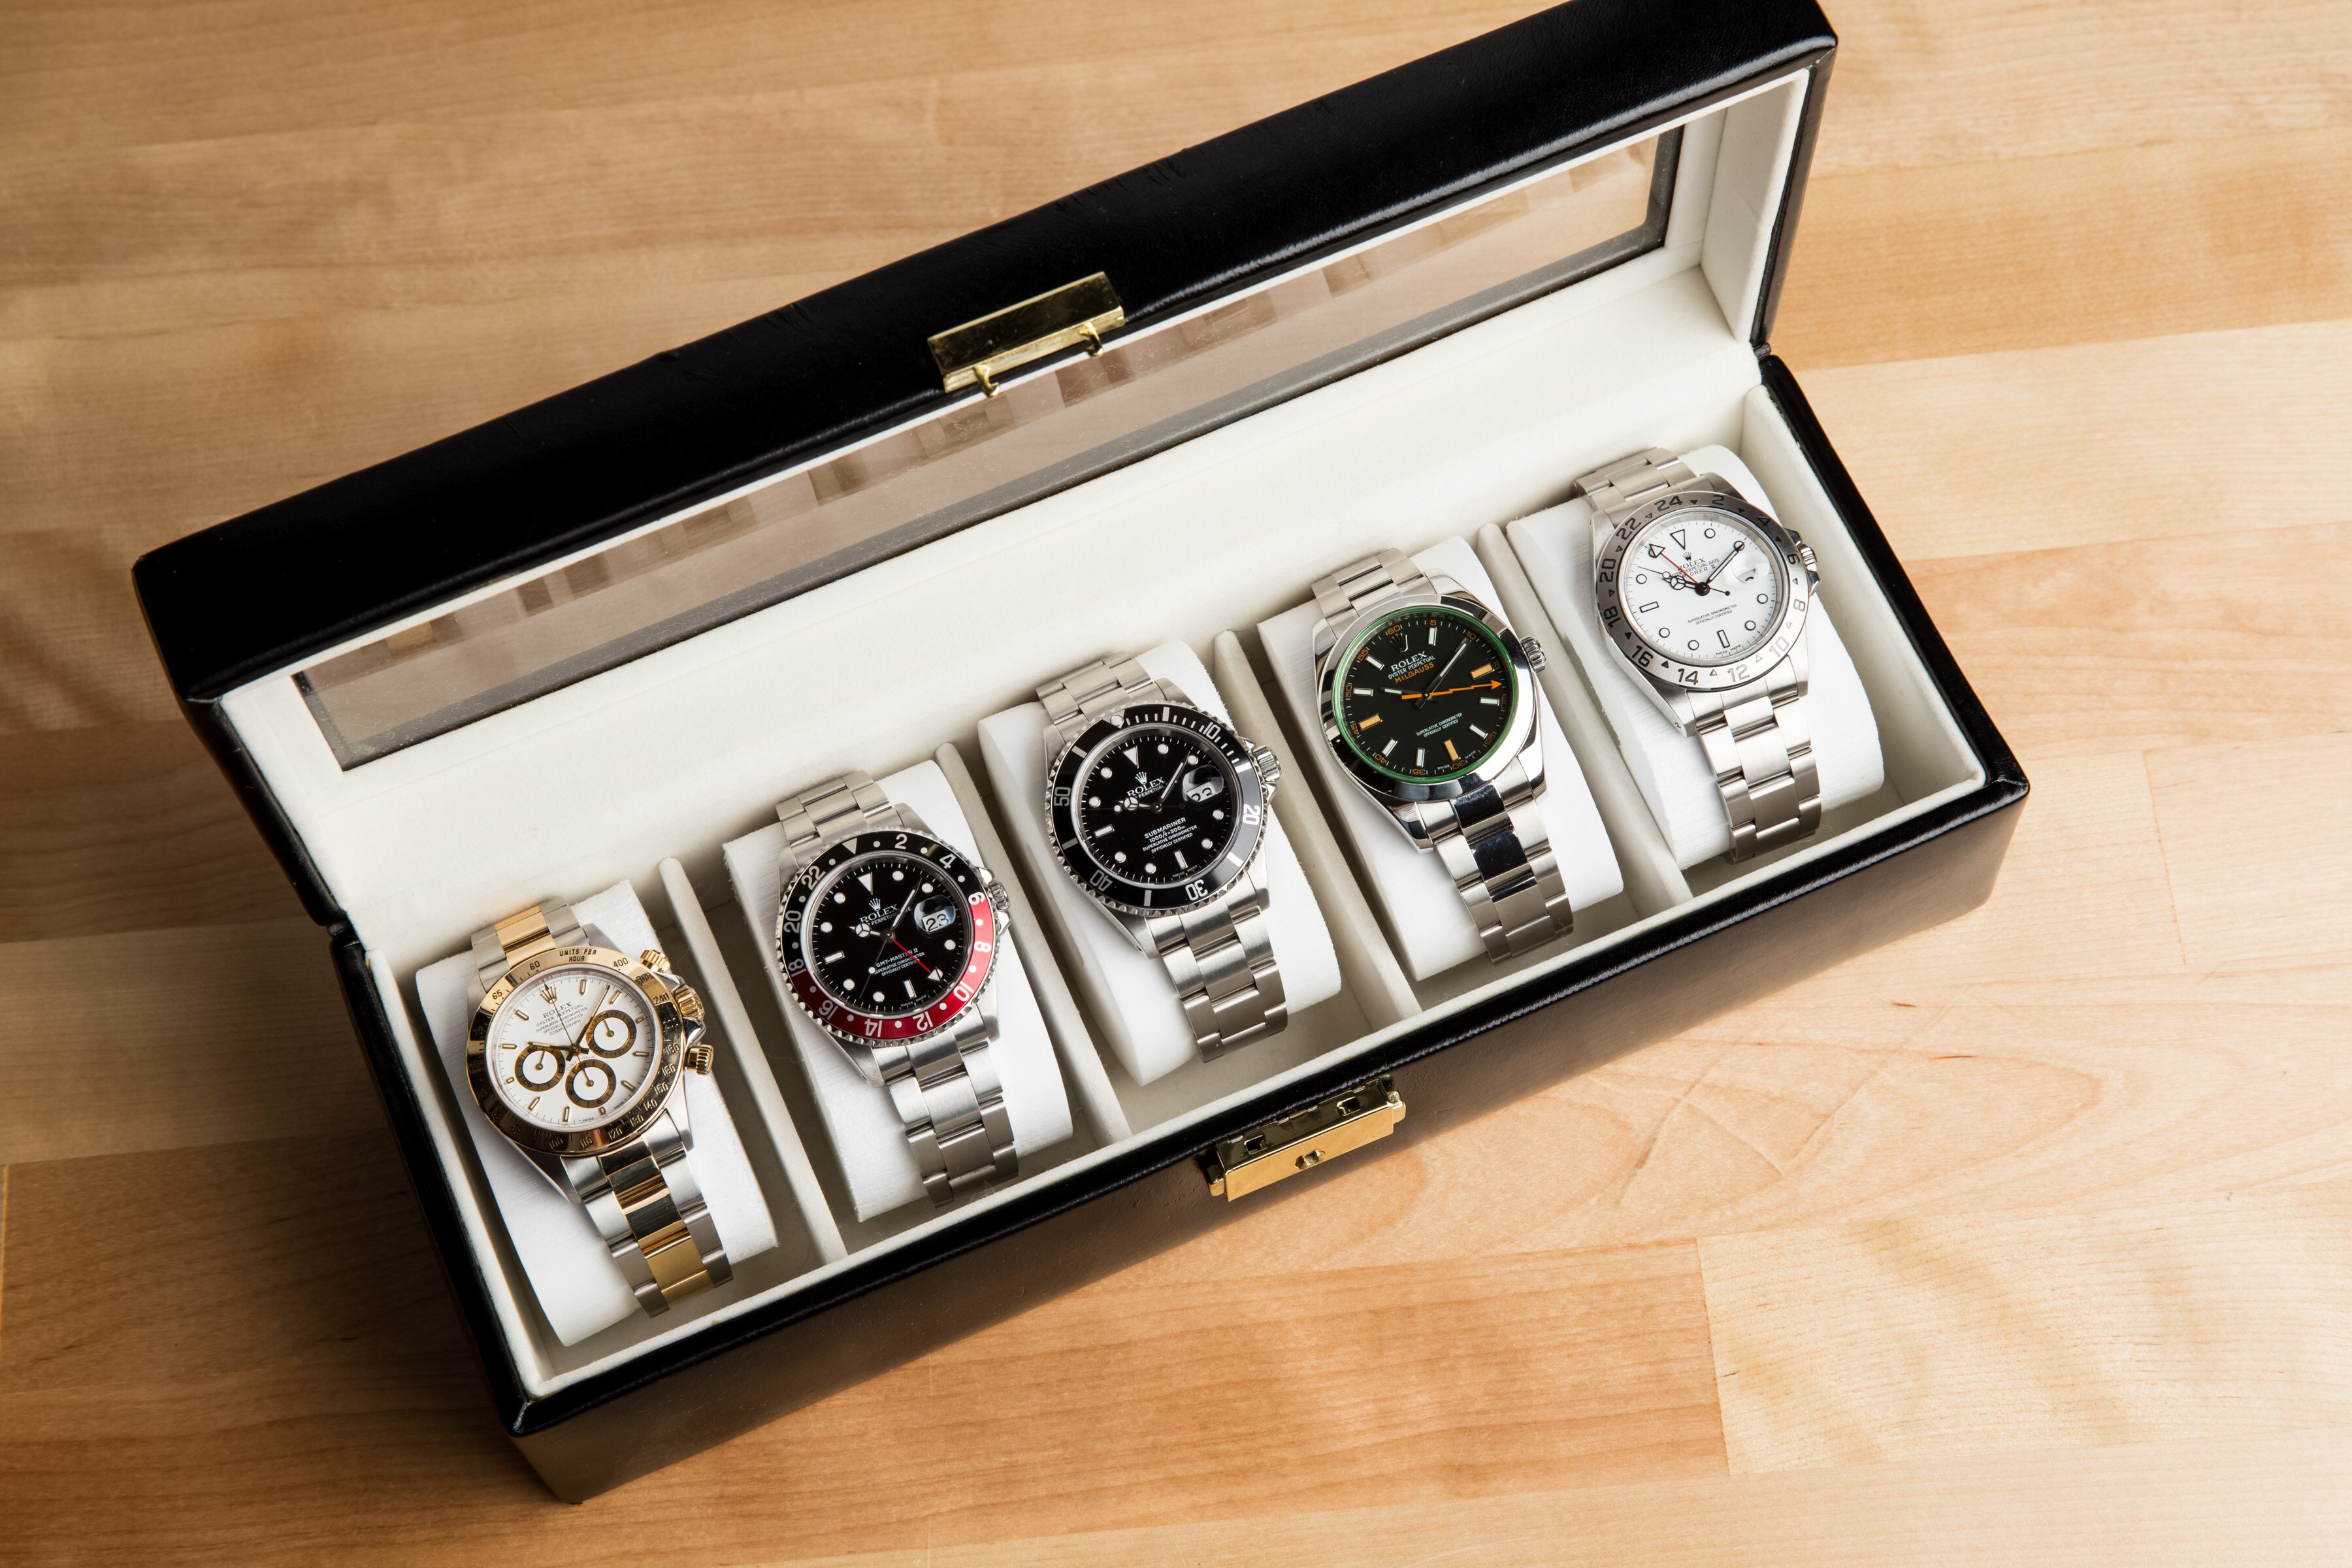 Наручные часы маркет. Rolex watch Box. Rolex Unboxing. Часы Маркет модель. Rolex watch hands.